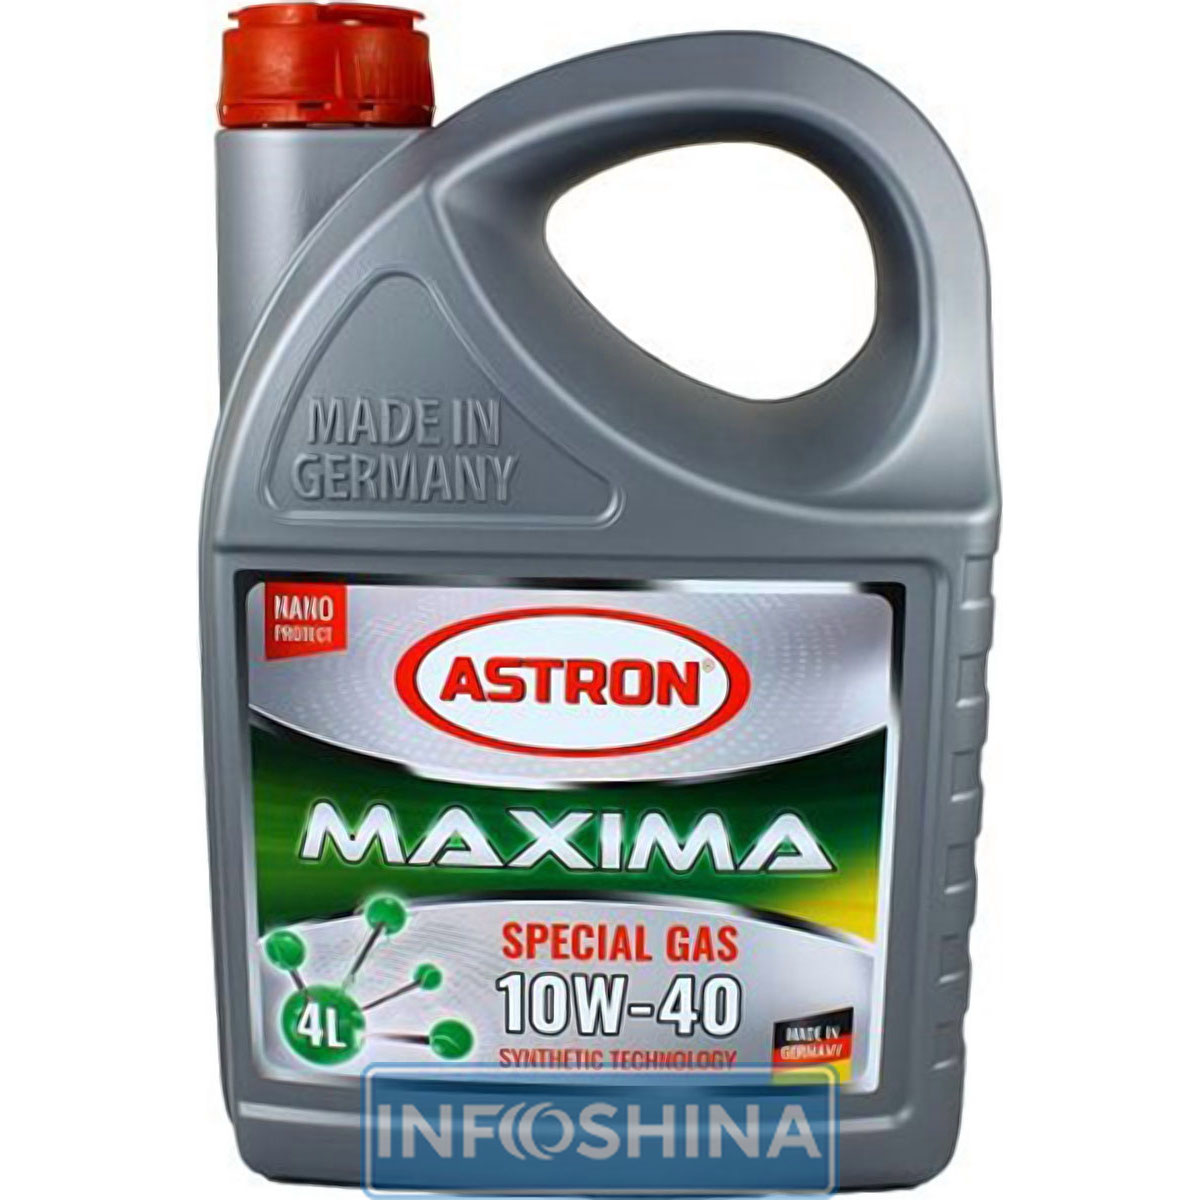 ASTRON Maxima Special GAS 10W-40